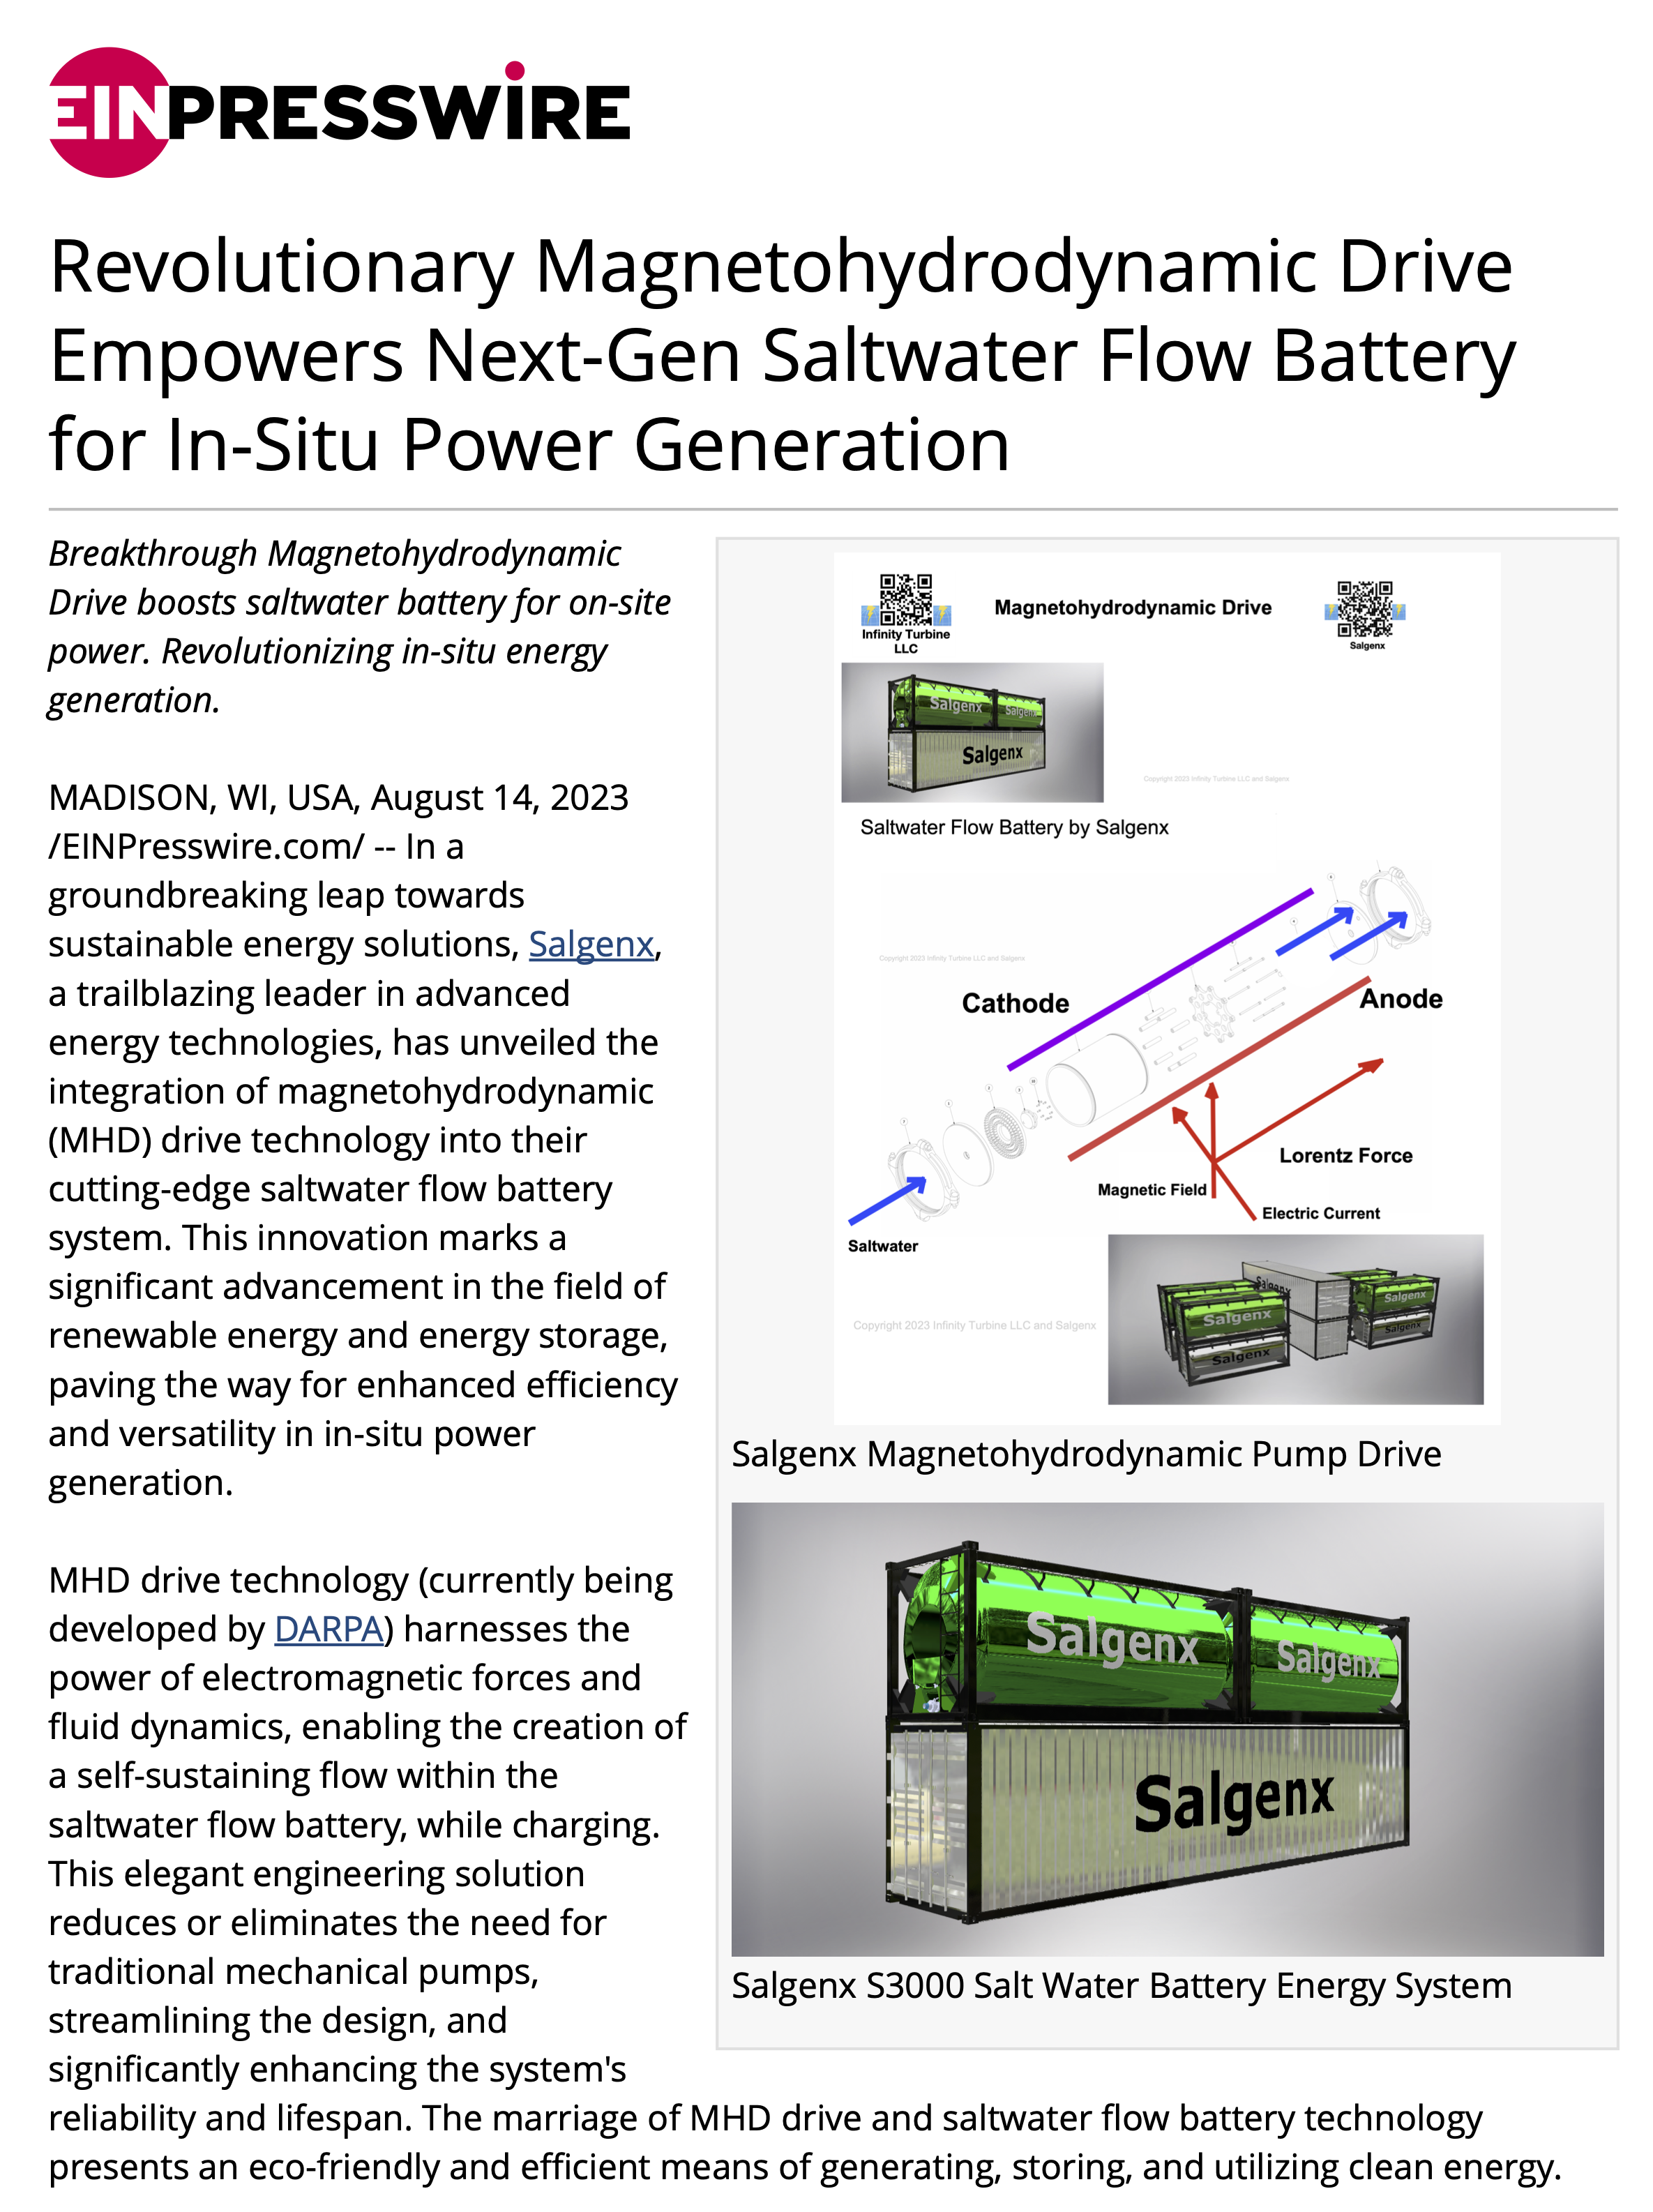 Revolutionary Magnetohydrodynamic Drive Empowers Next-Gen Saltwater Flow Battery for In-Situ Power Generation